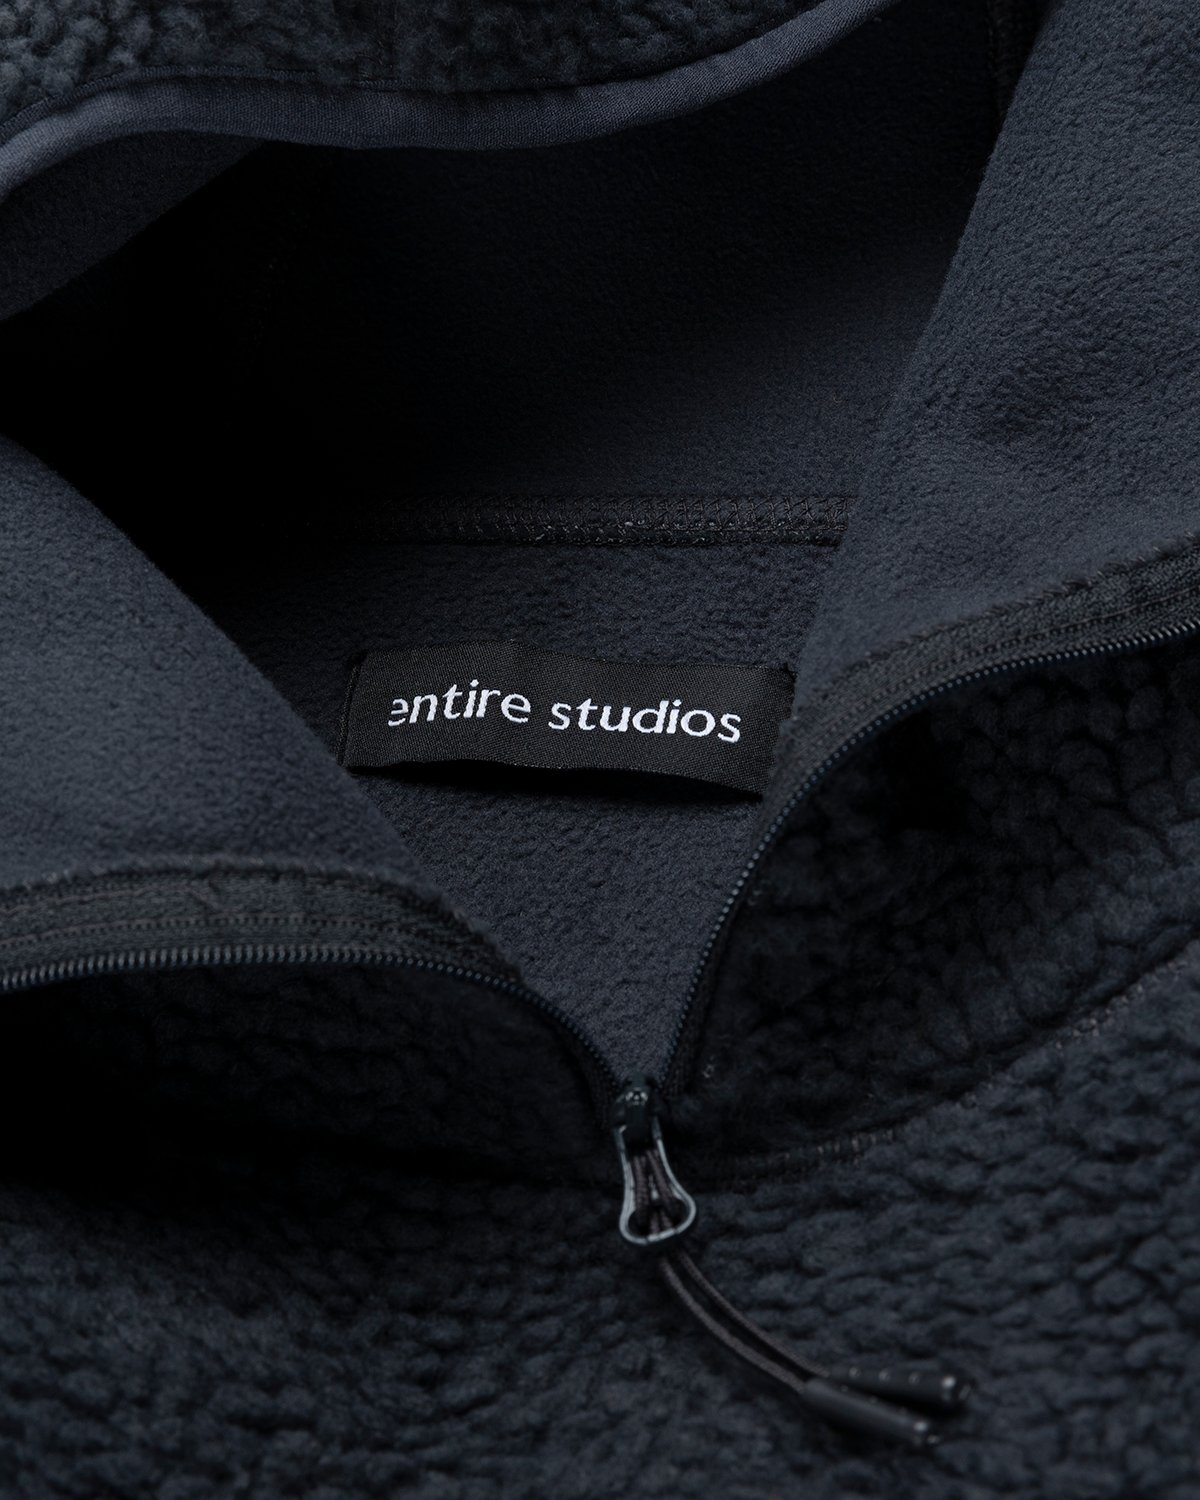 Entire Studios - Fluffy Fleece Charcoal - Clothing - Grey - Image 4